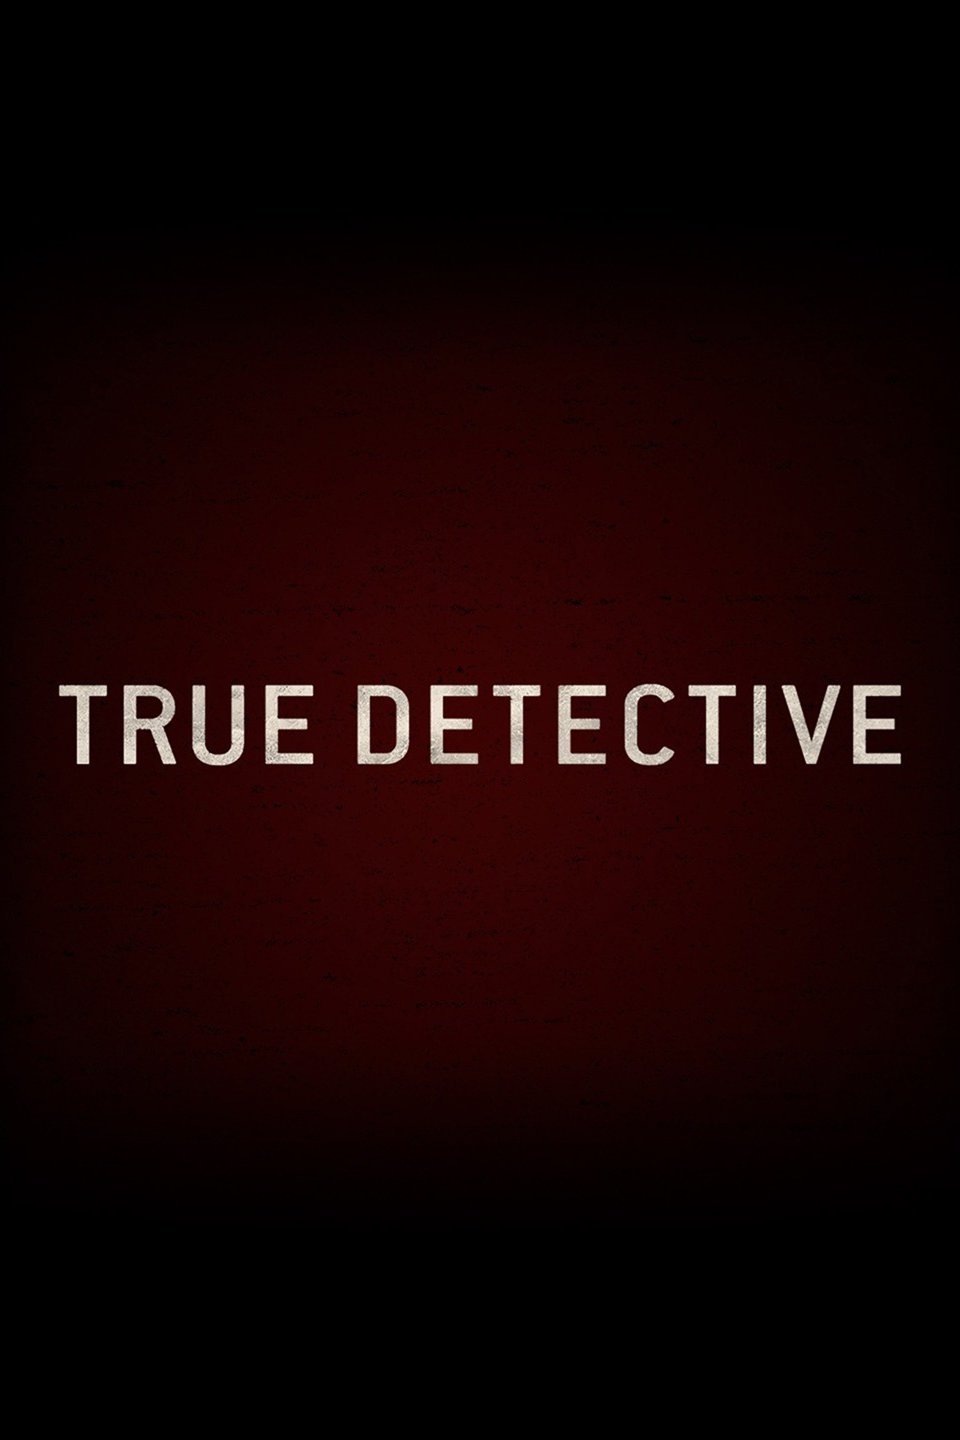 true detective season 1 rating